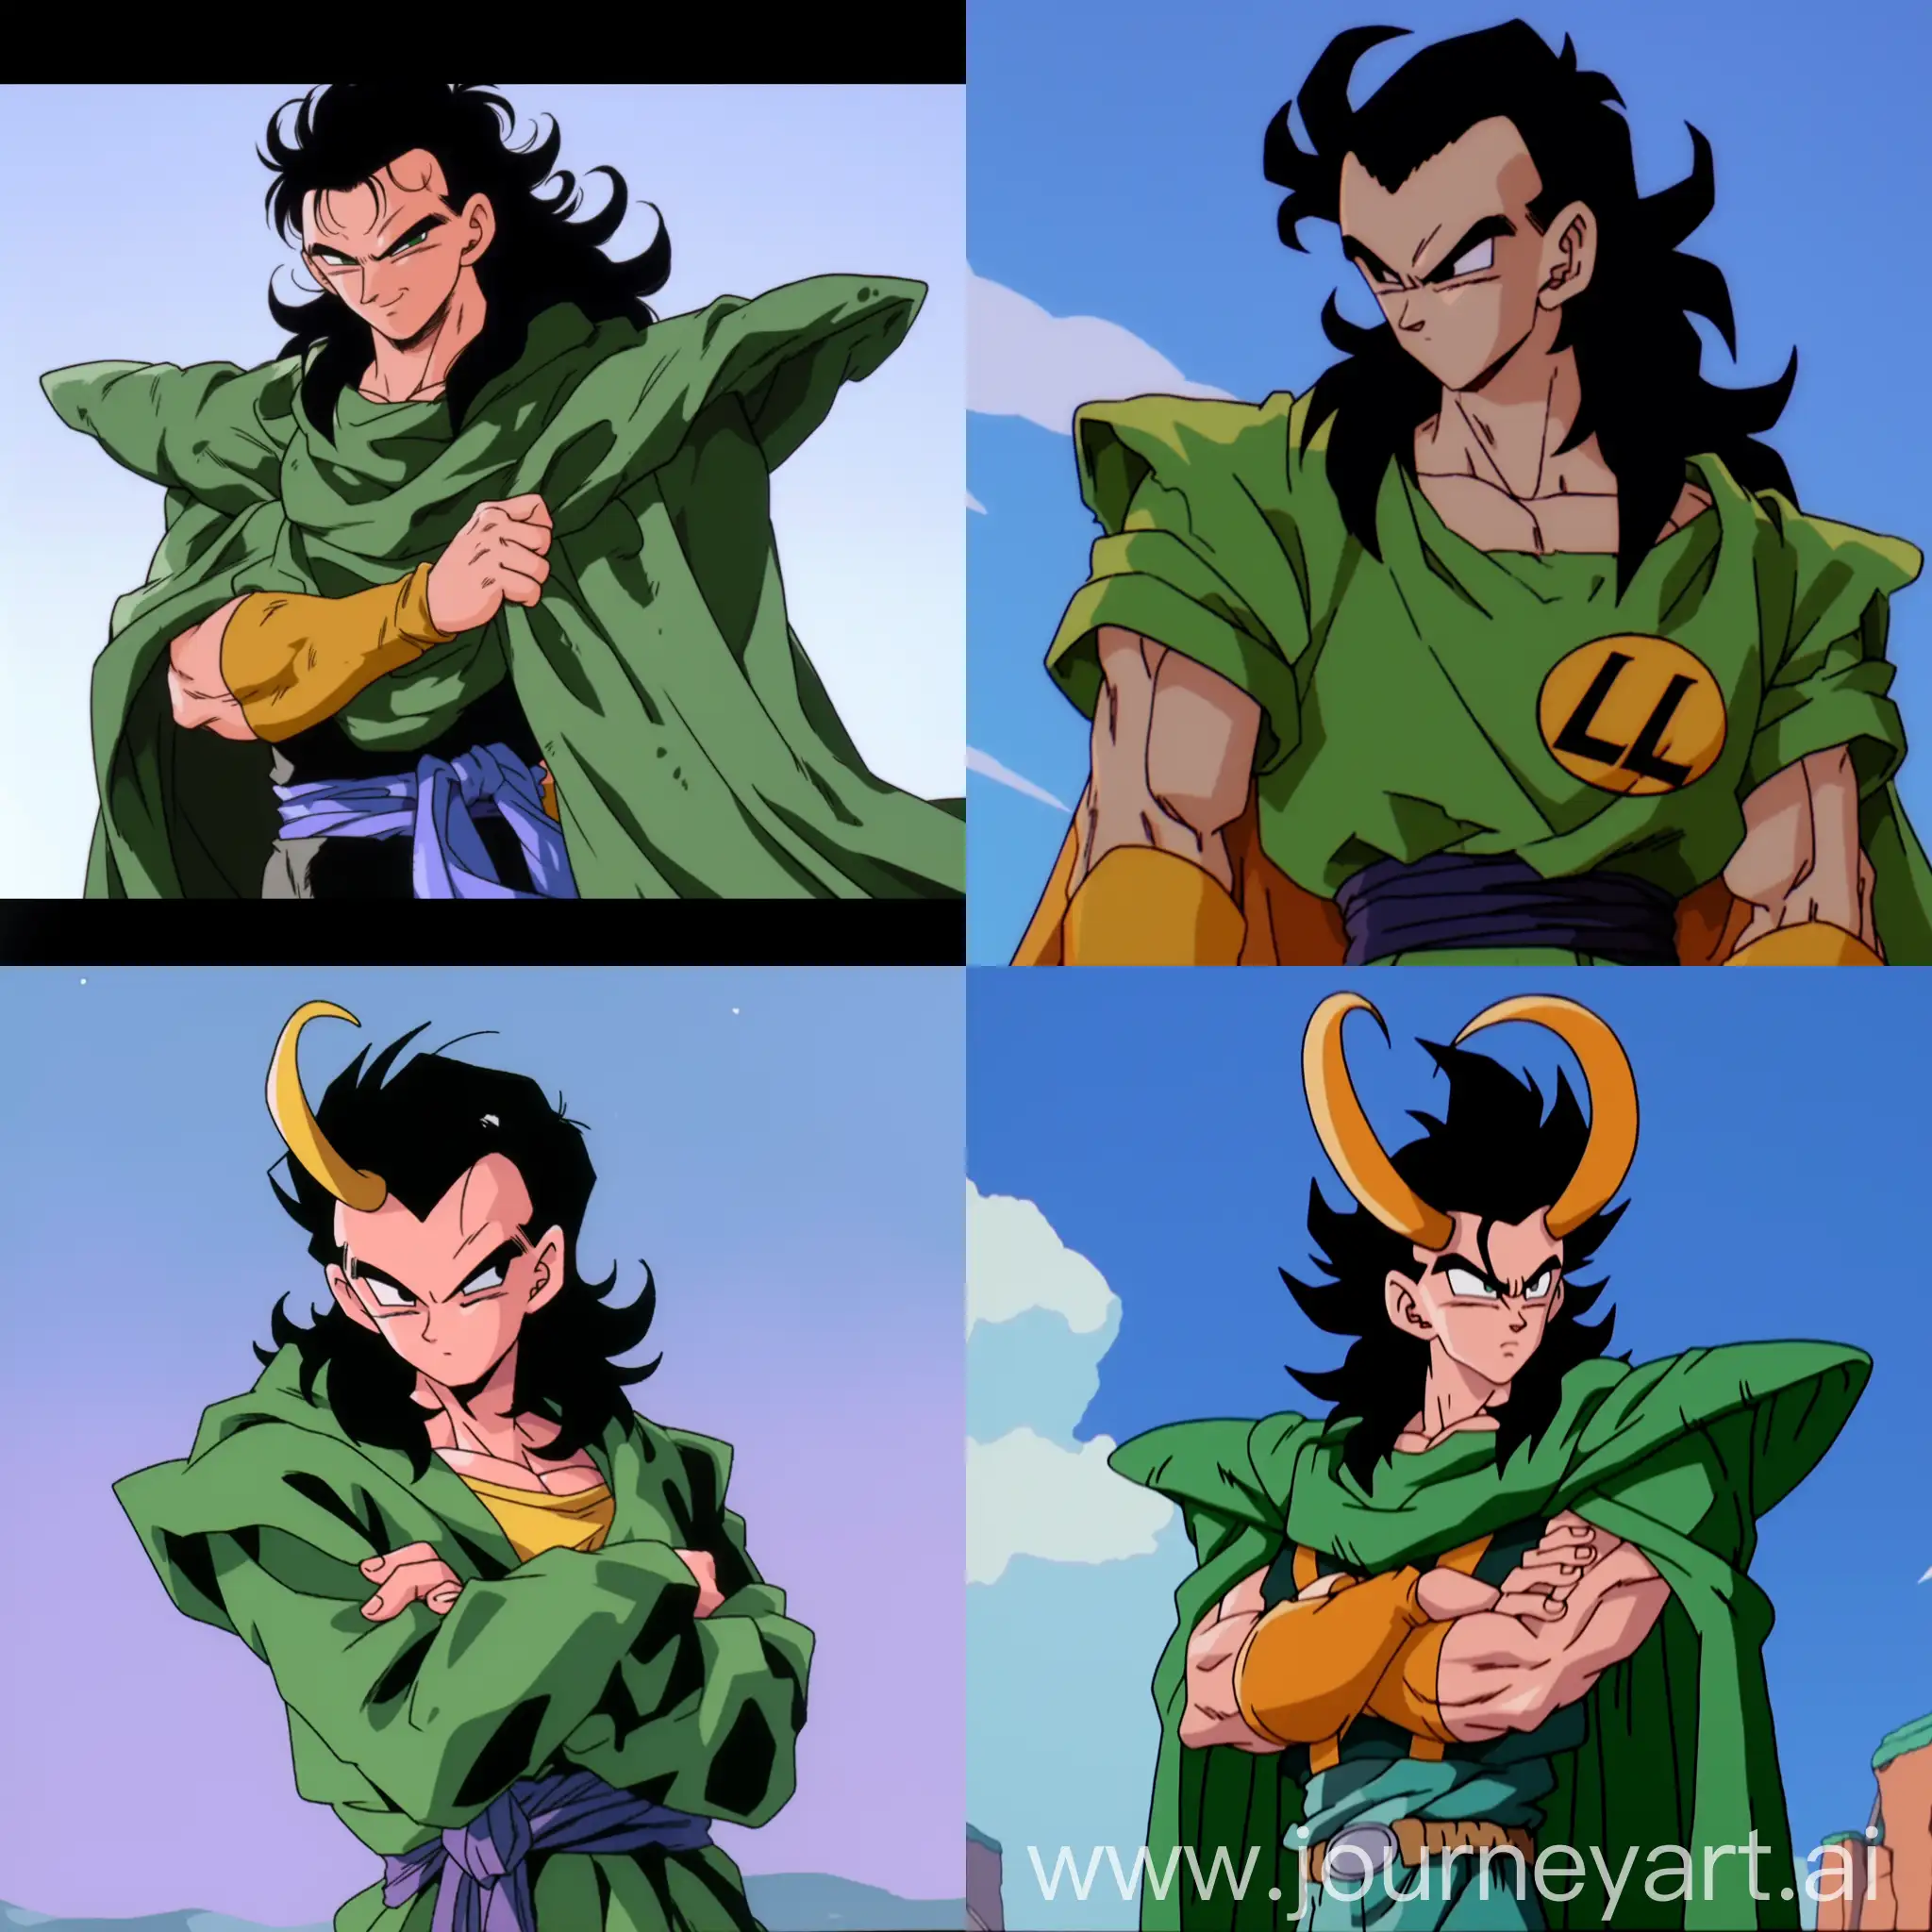 Loki-Inspired-by-Dragon-Ball-Marvels-Mischievous-Deity-in-Akira-Toriyama-Style